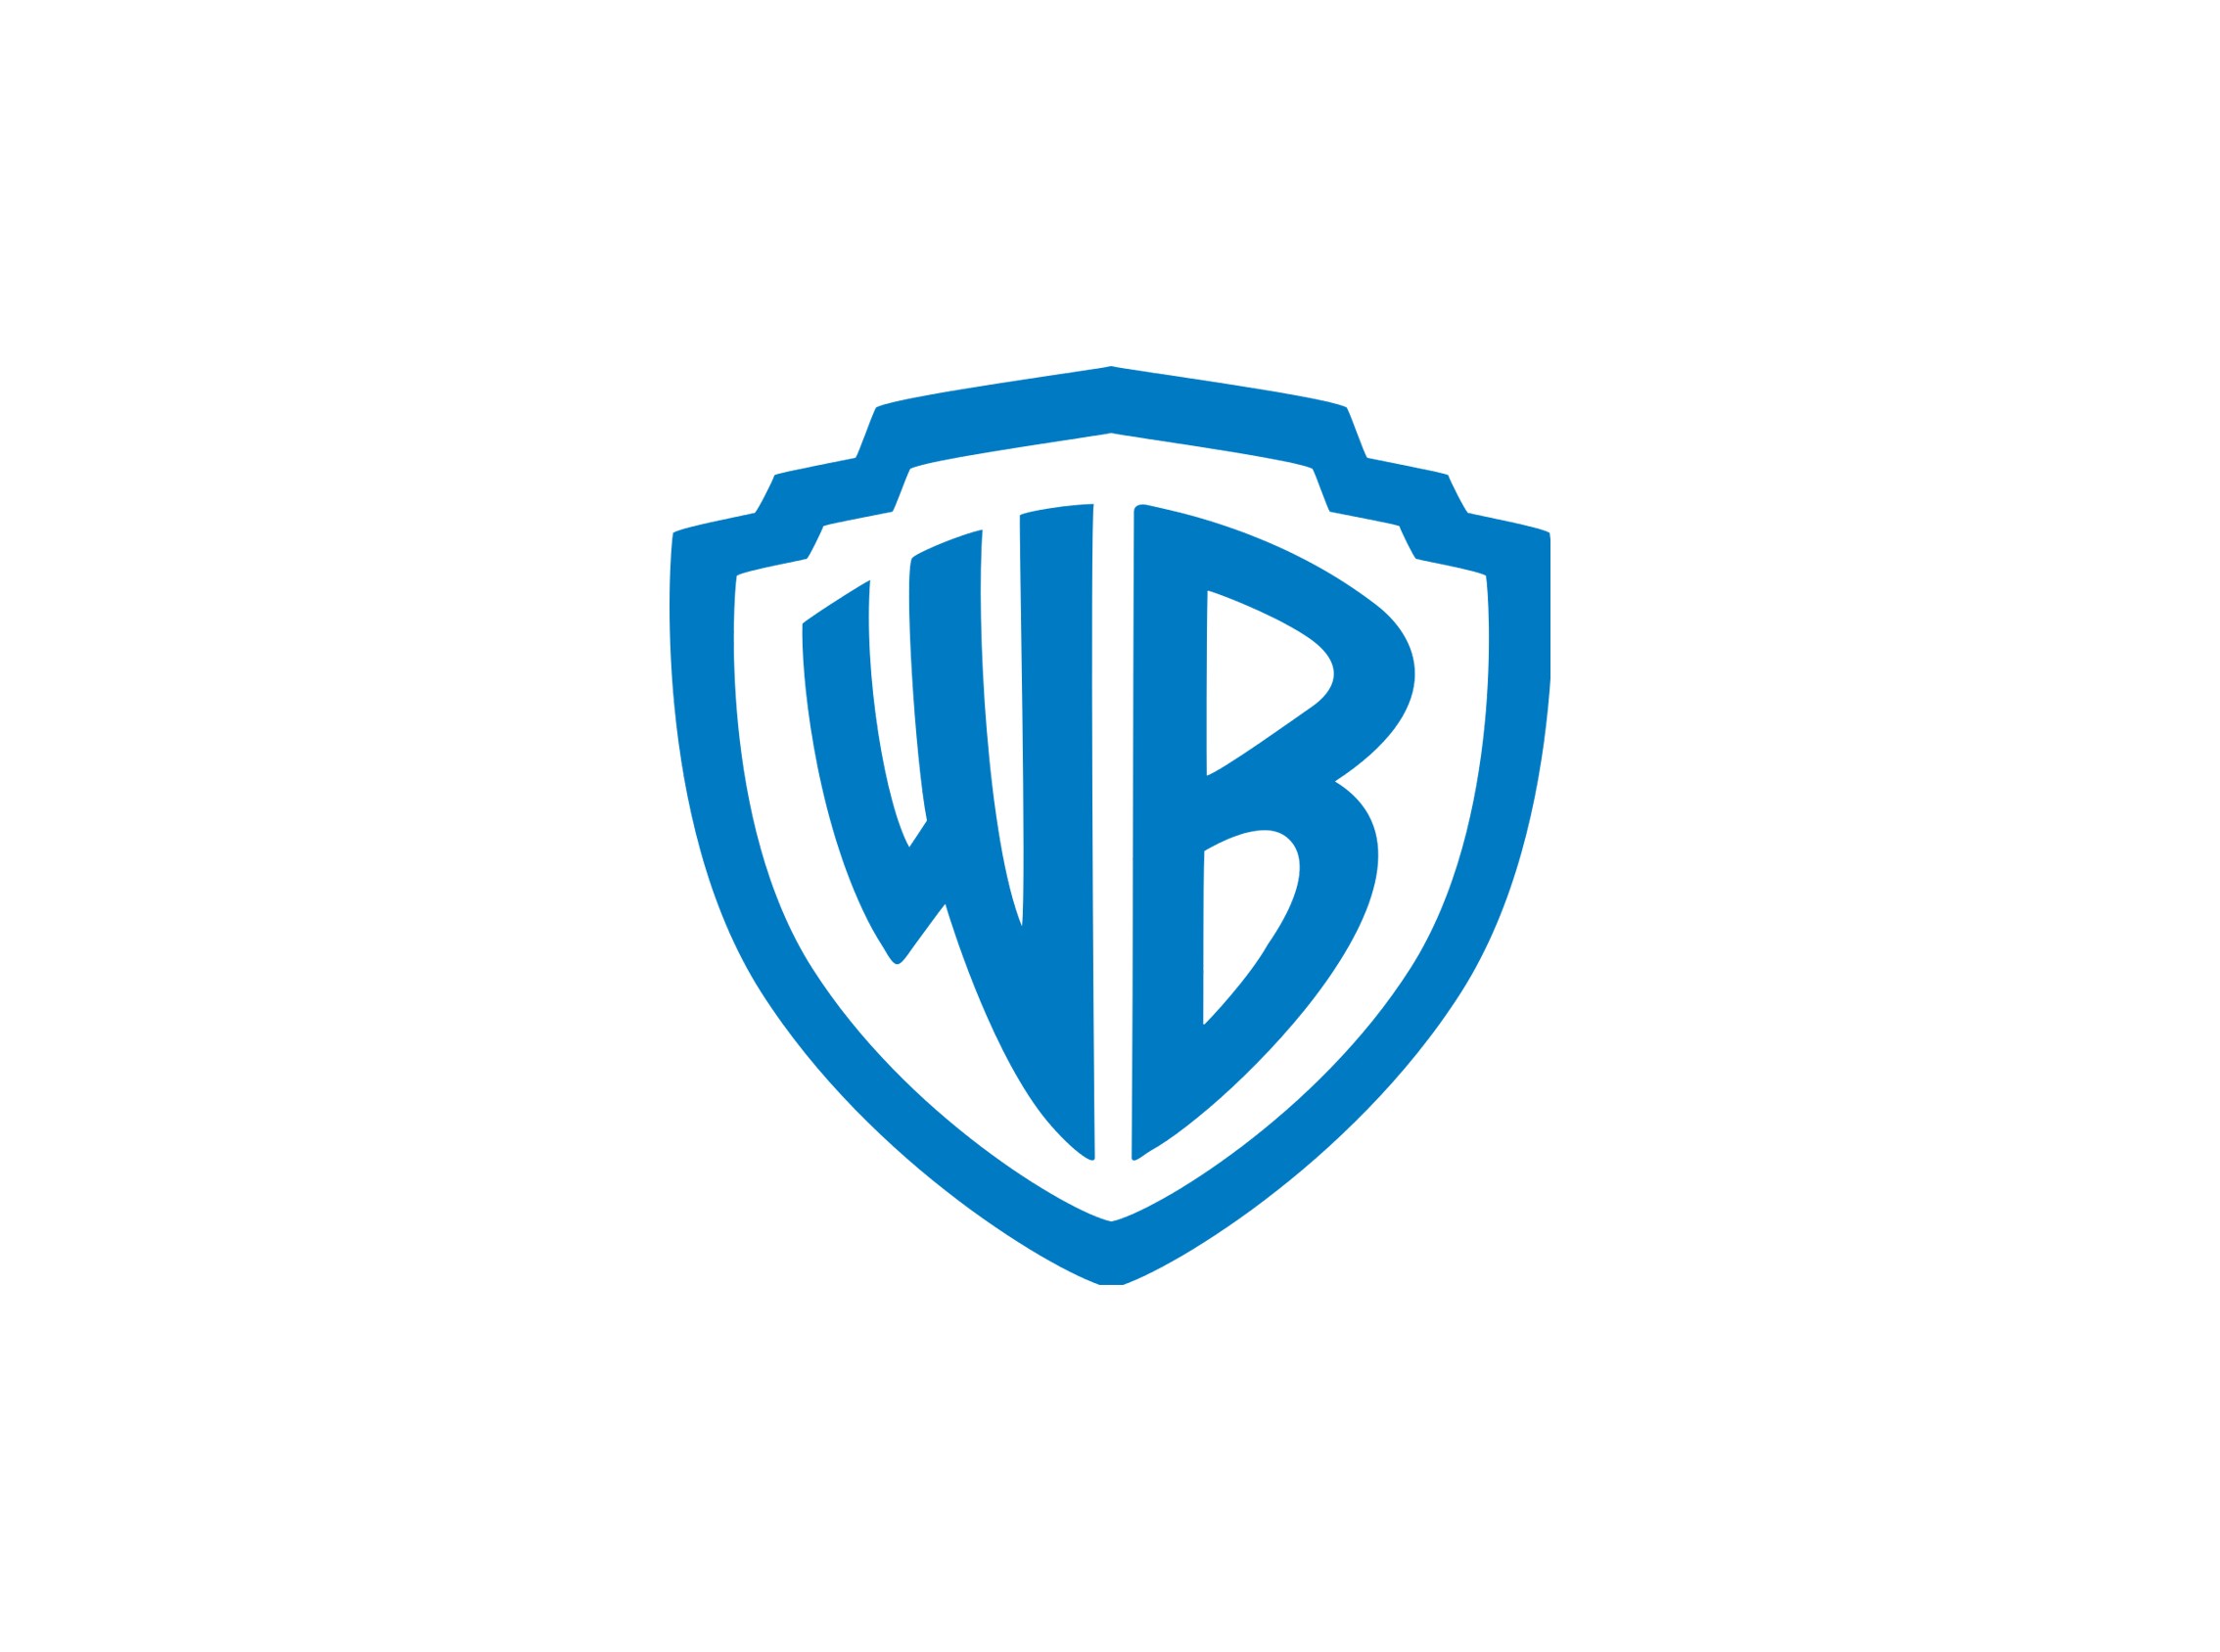 Offerte di lavoro in Warner Bros a Roma: cercasi Digital Media Manager e Marketing Manager Local Production